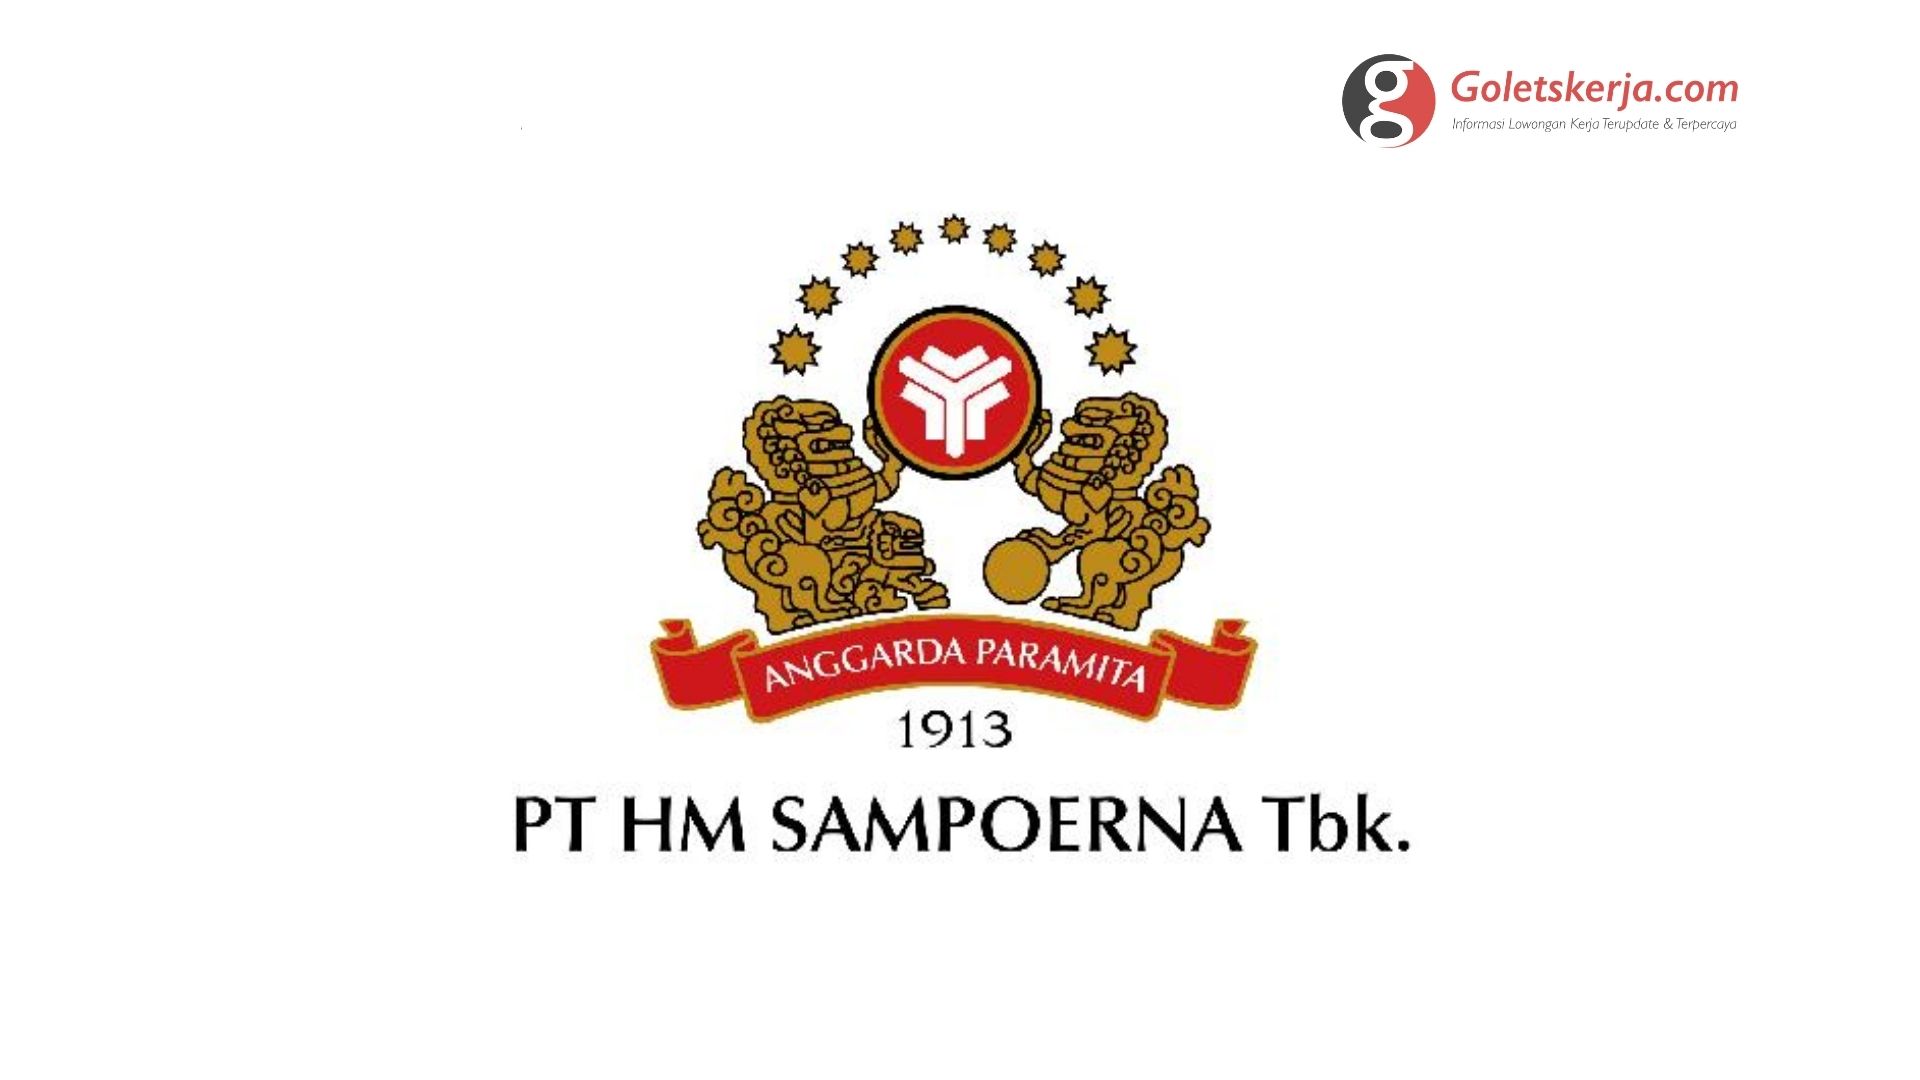 Recruitment HM Sampoerna : 4 Positions